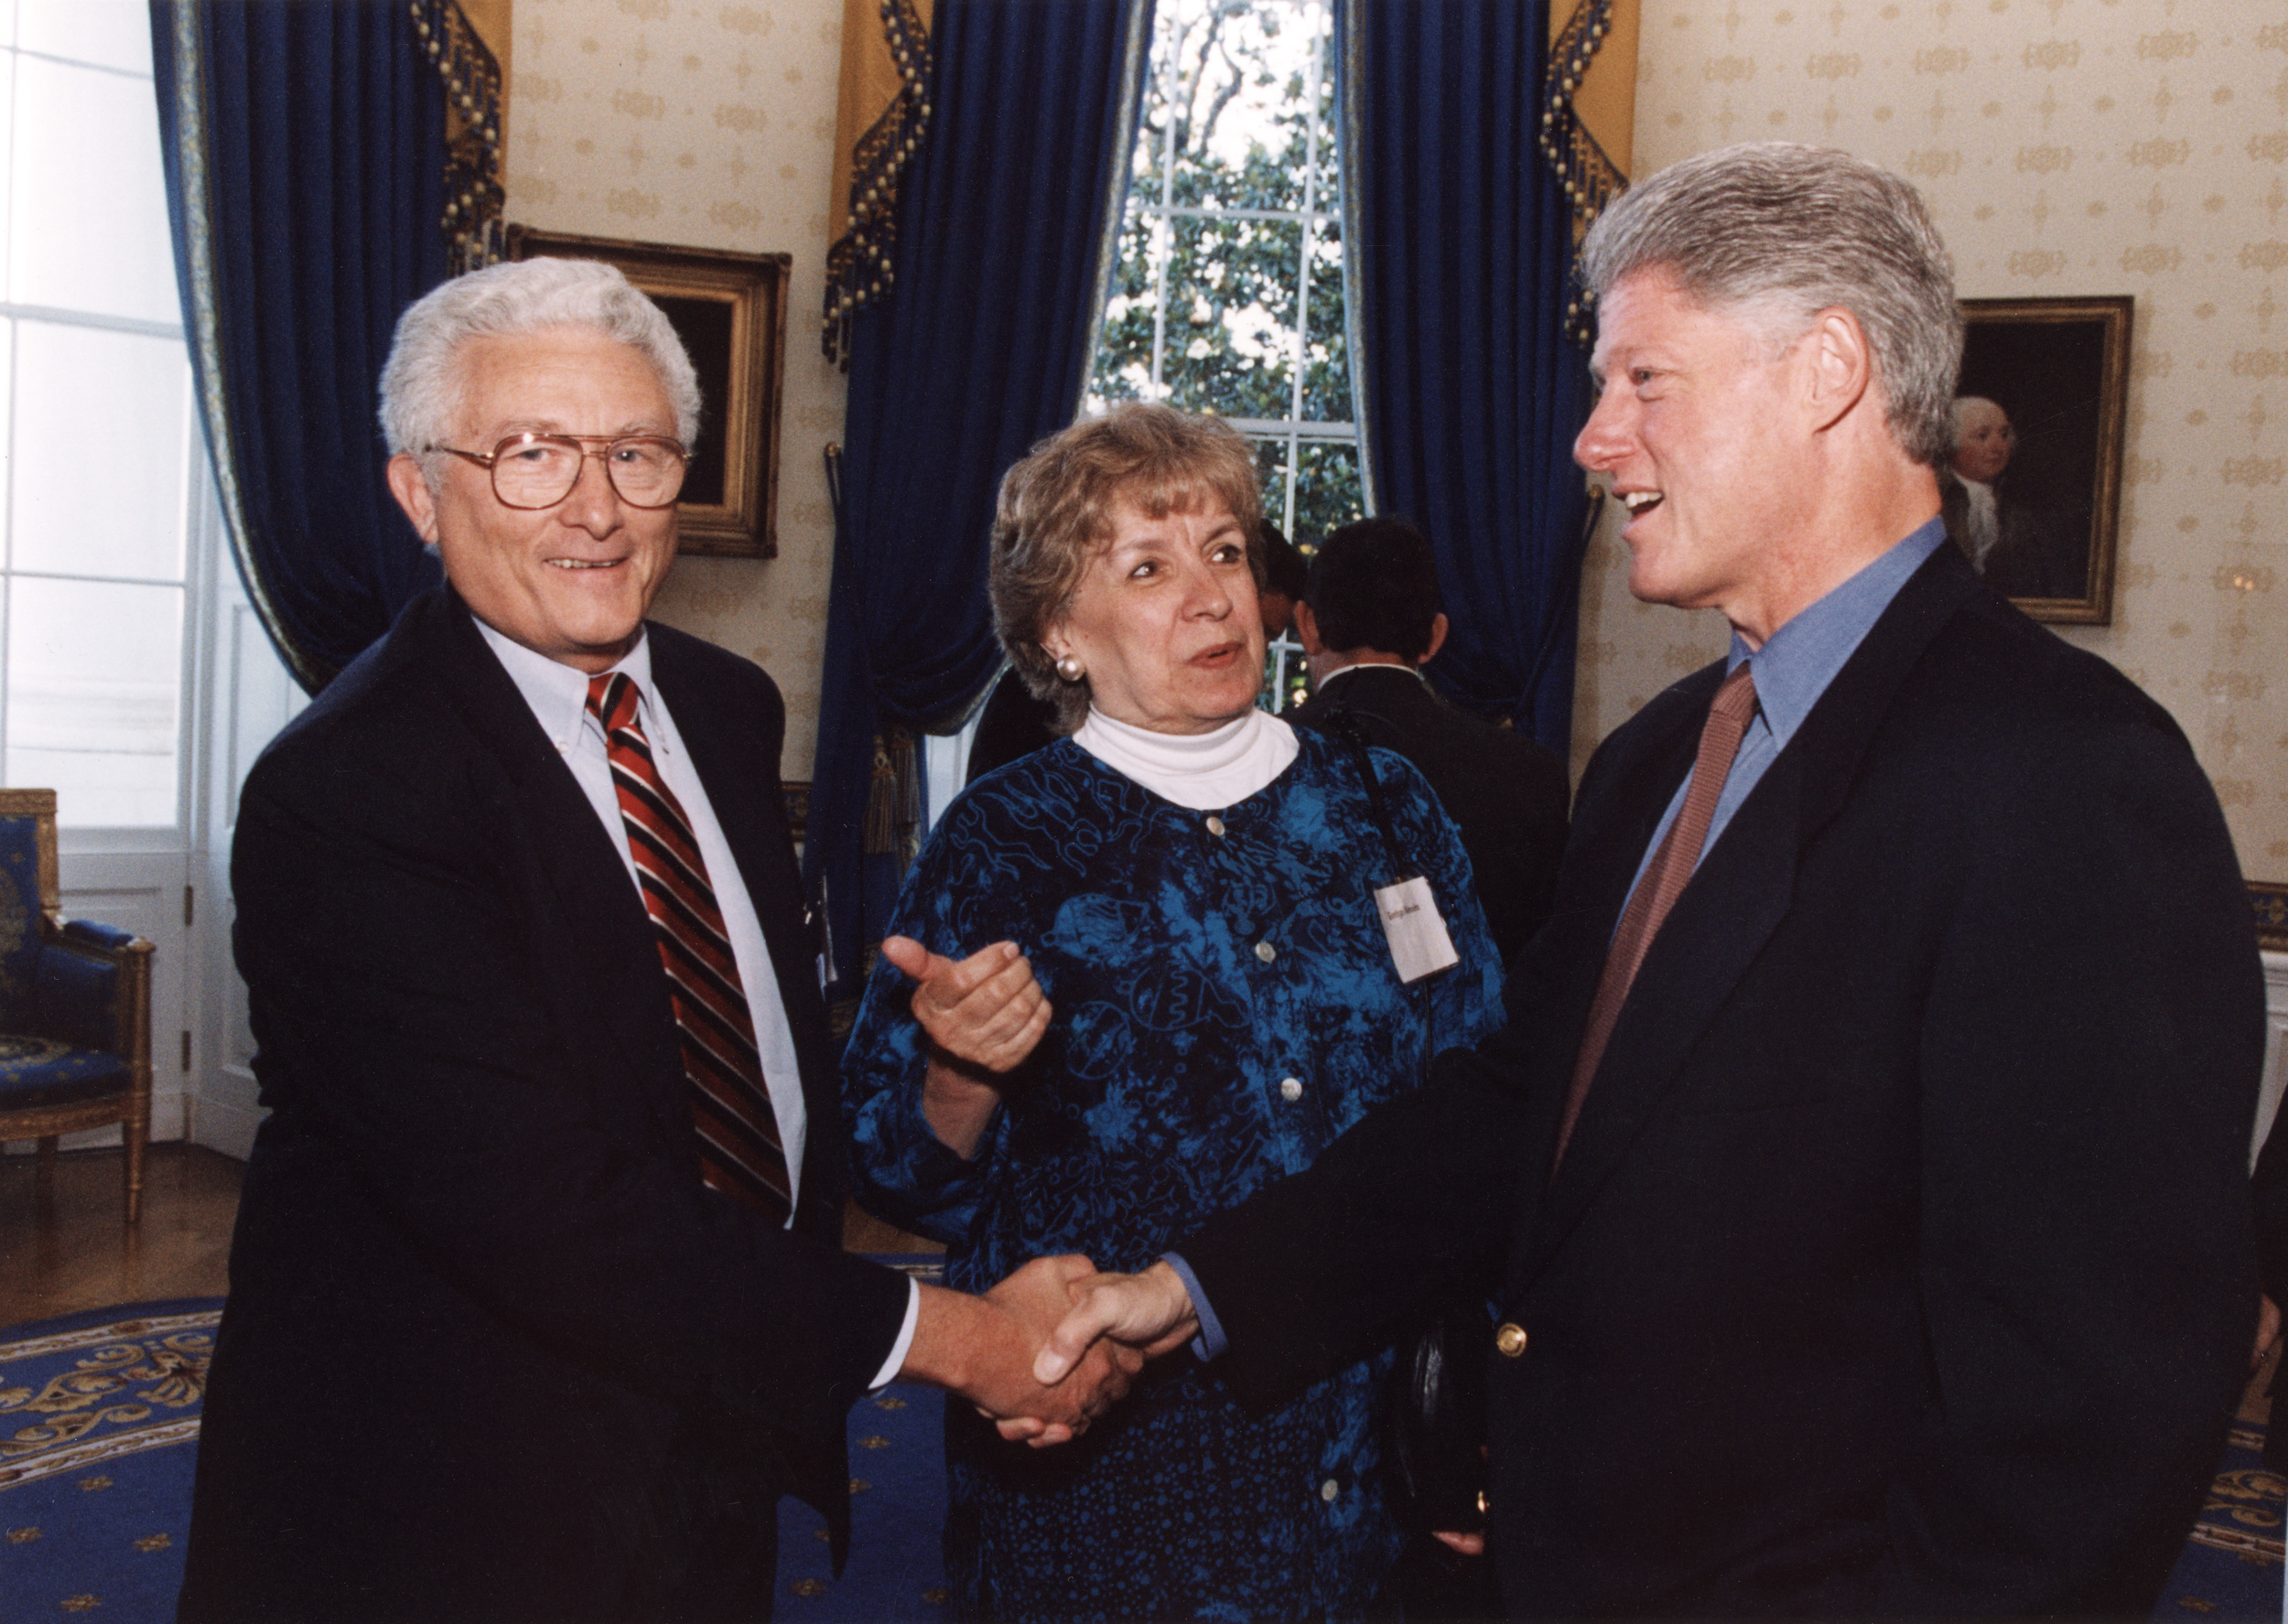 Photo for Item 14 High-Res Sandy_Nemitz_with Bill Clinton June 27 1997.jpg